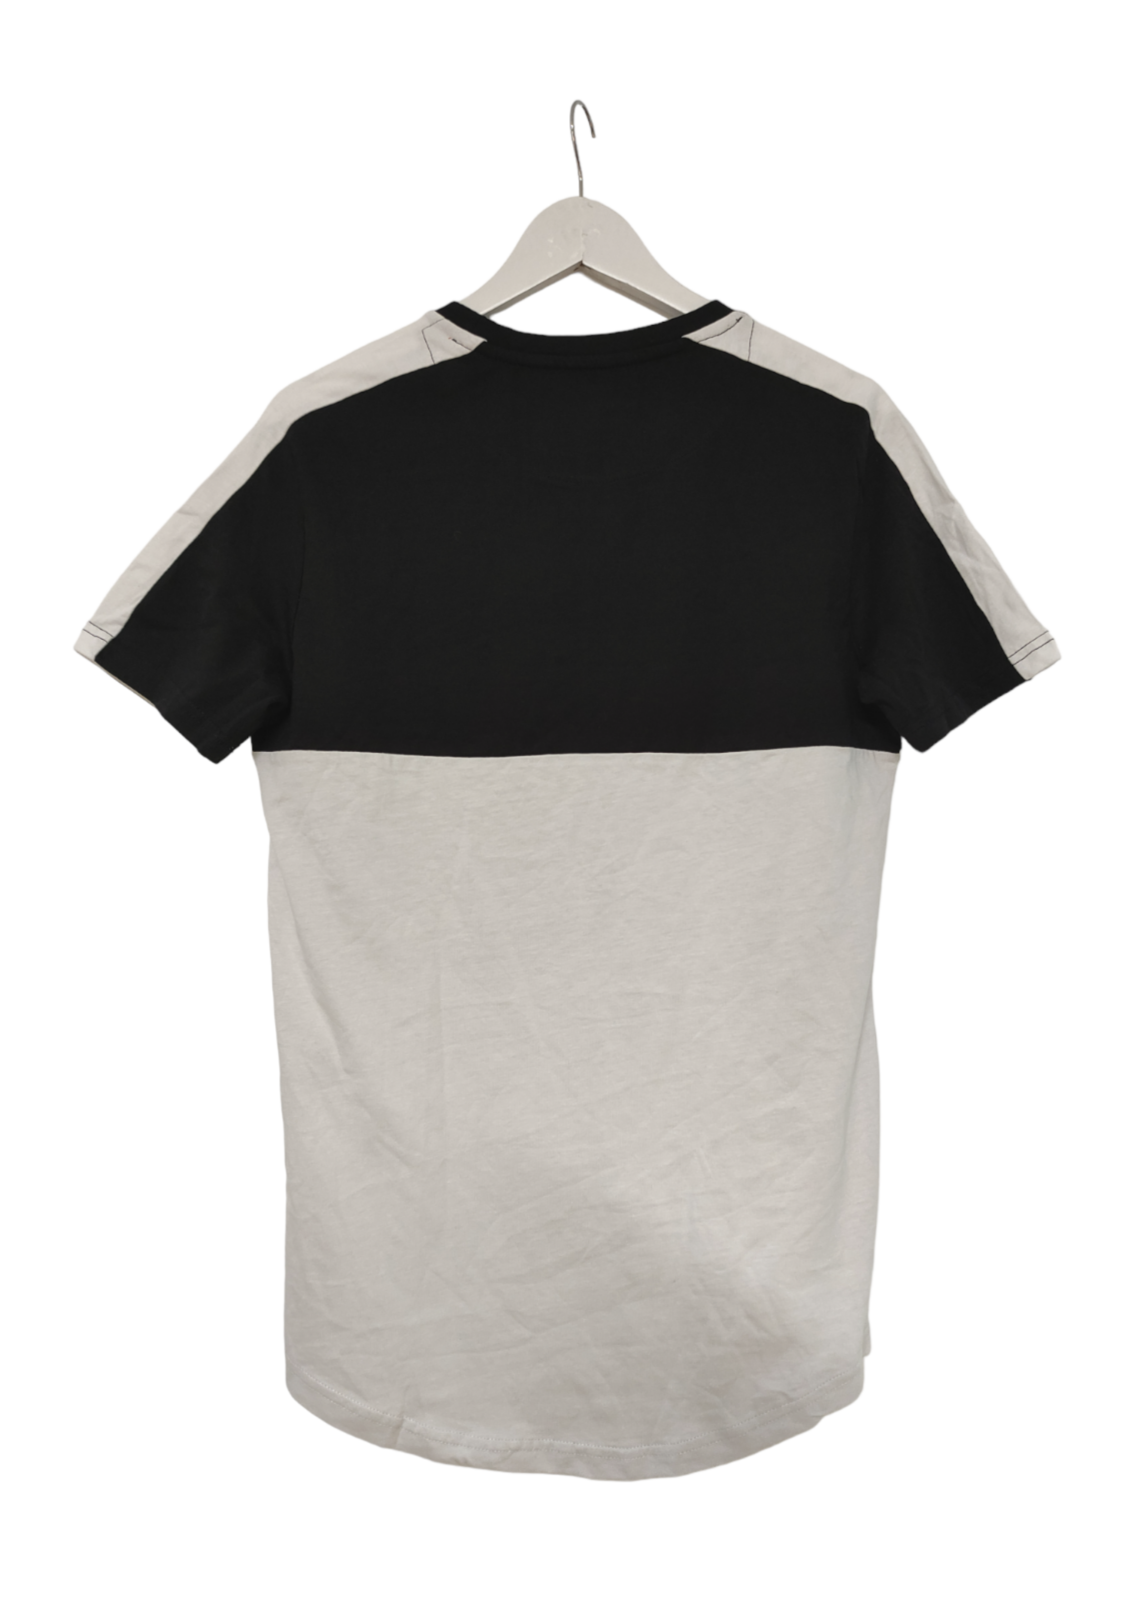 Stock, Aνδρική Mπλούζα - T-Shirt DEFEND σε Μαύρο - Λευκό Χρώμα (Medium)